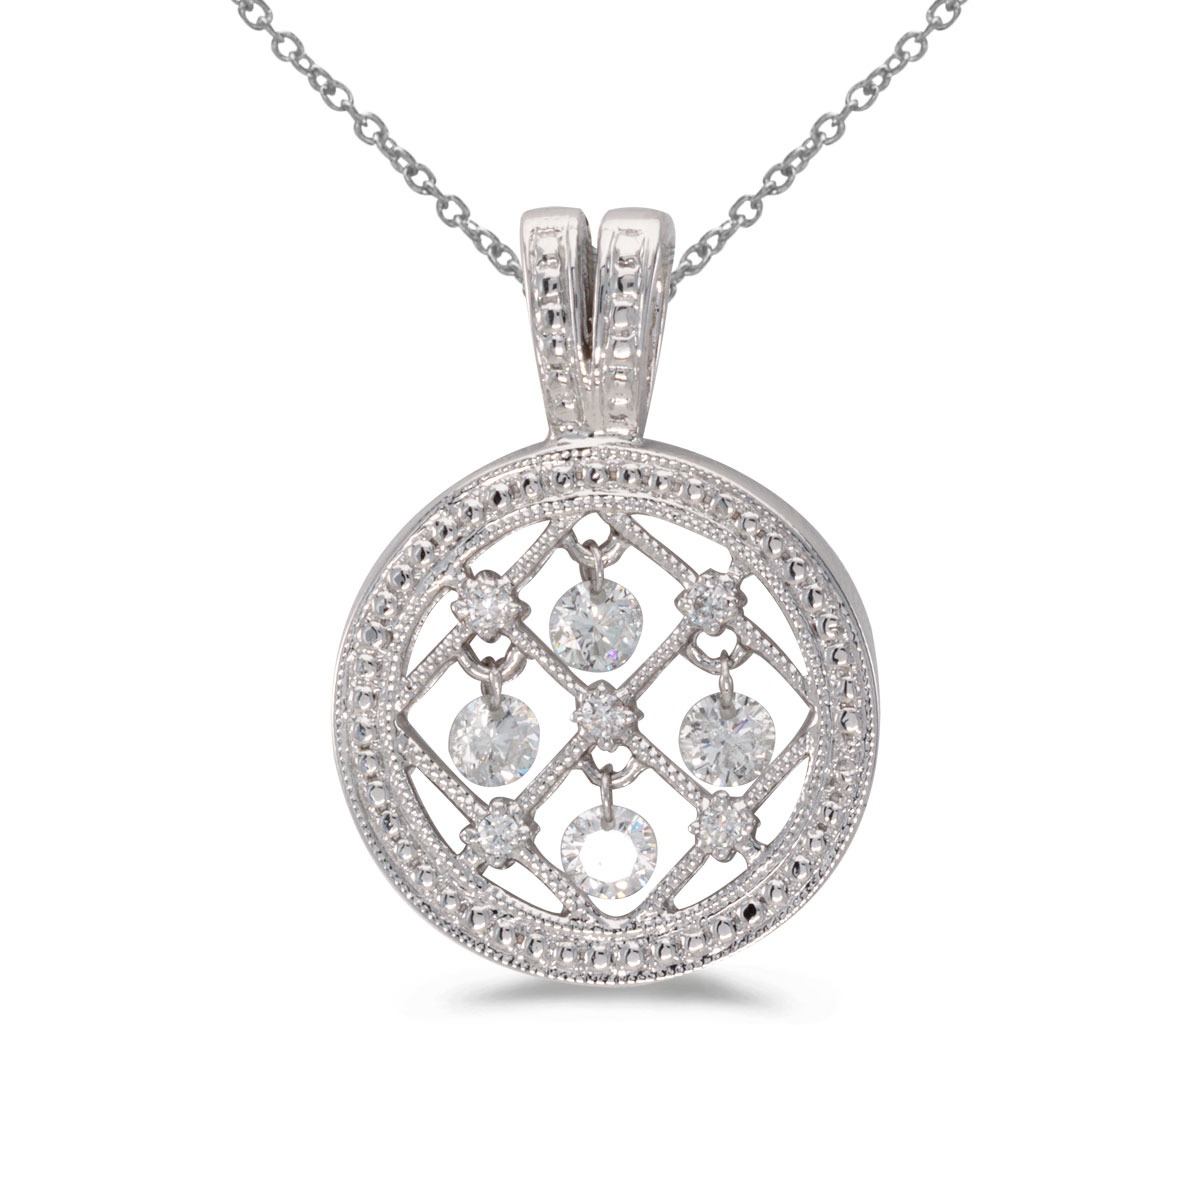 This uniquely designed circular pendant from Dashing Diamonds features four sparkling diamonds su...